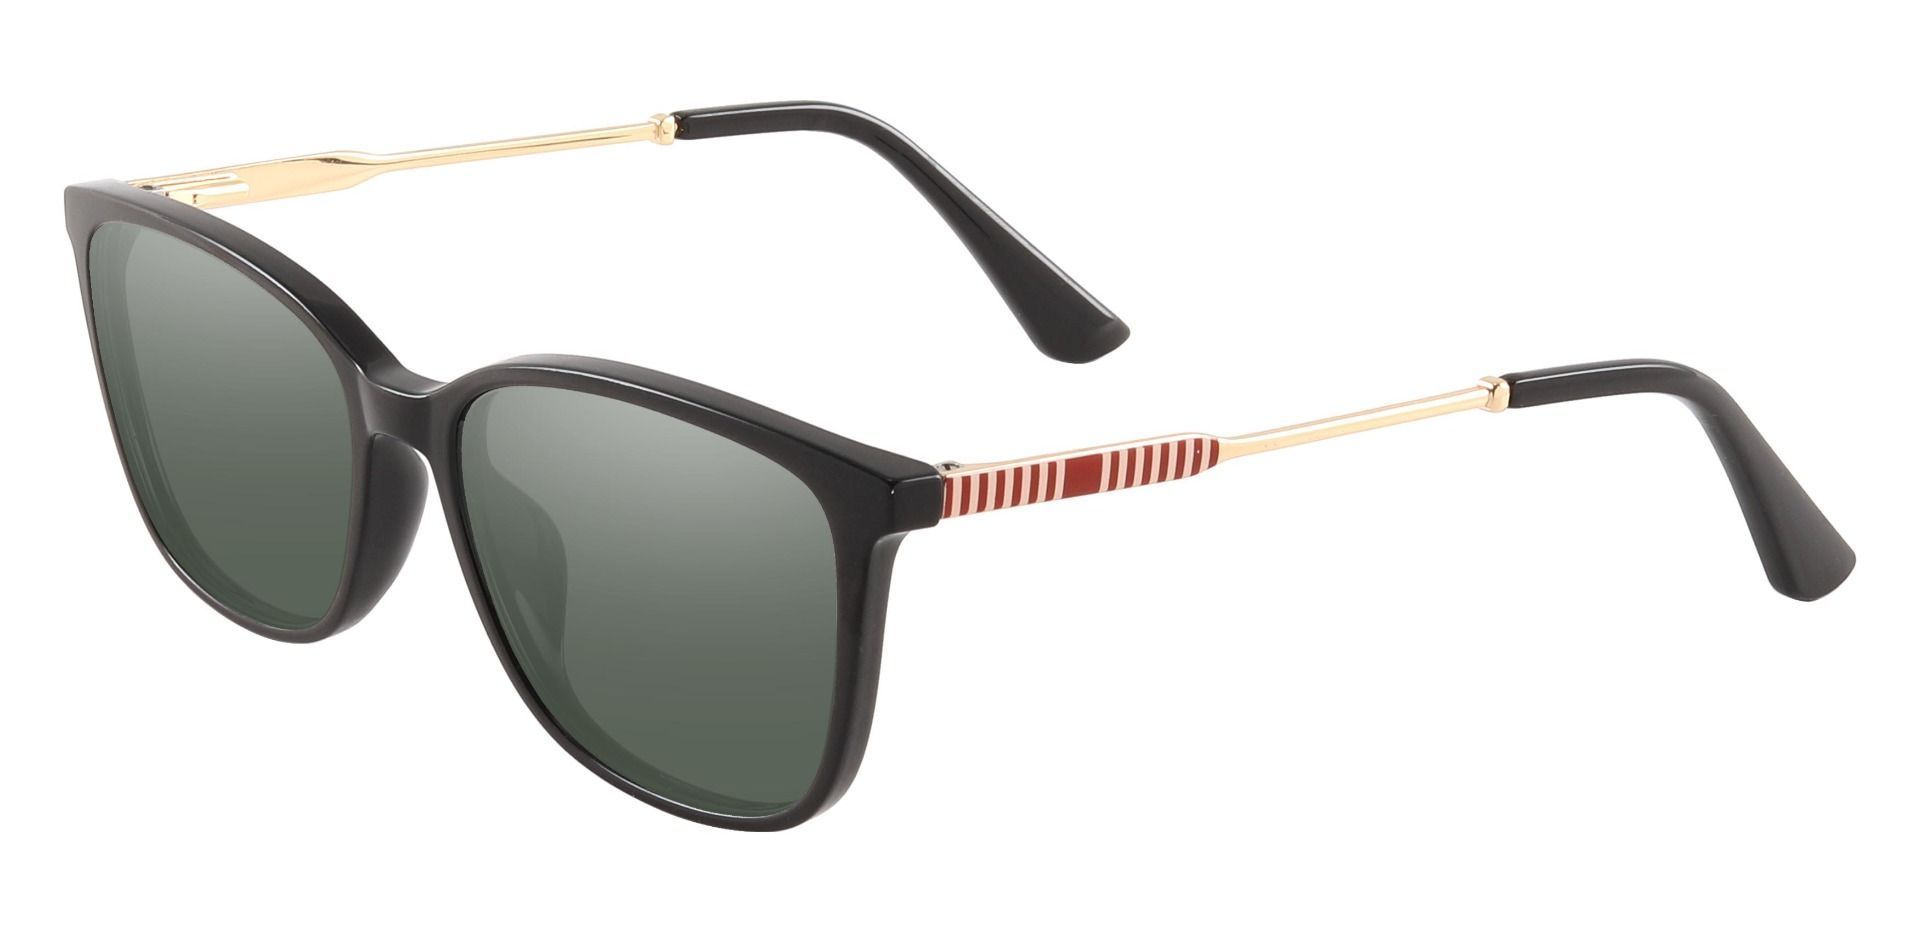 Miami Rectangle Progressive Sunglasses - Black Frame With Green Lenses